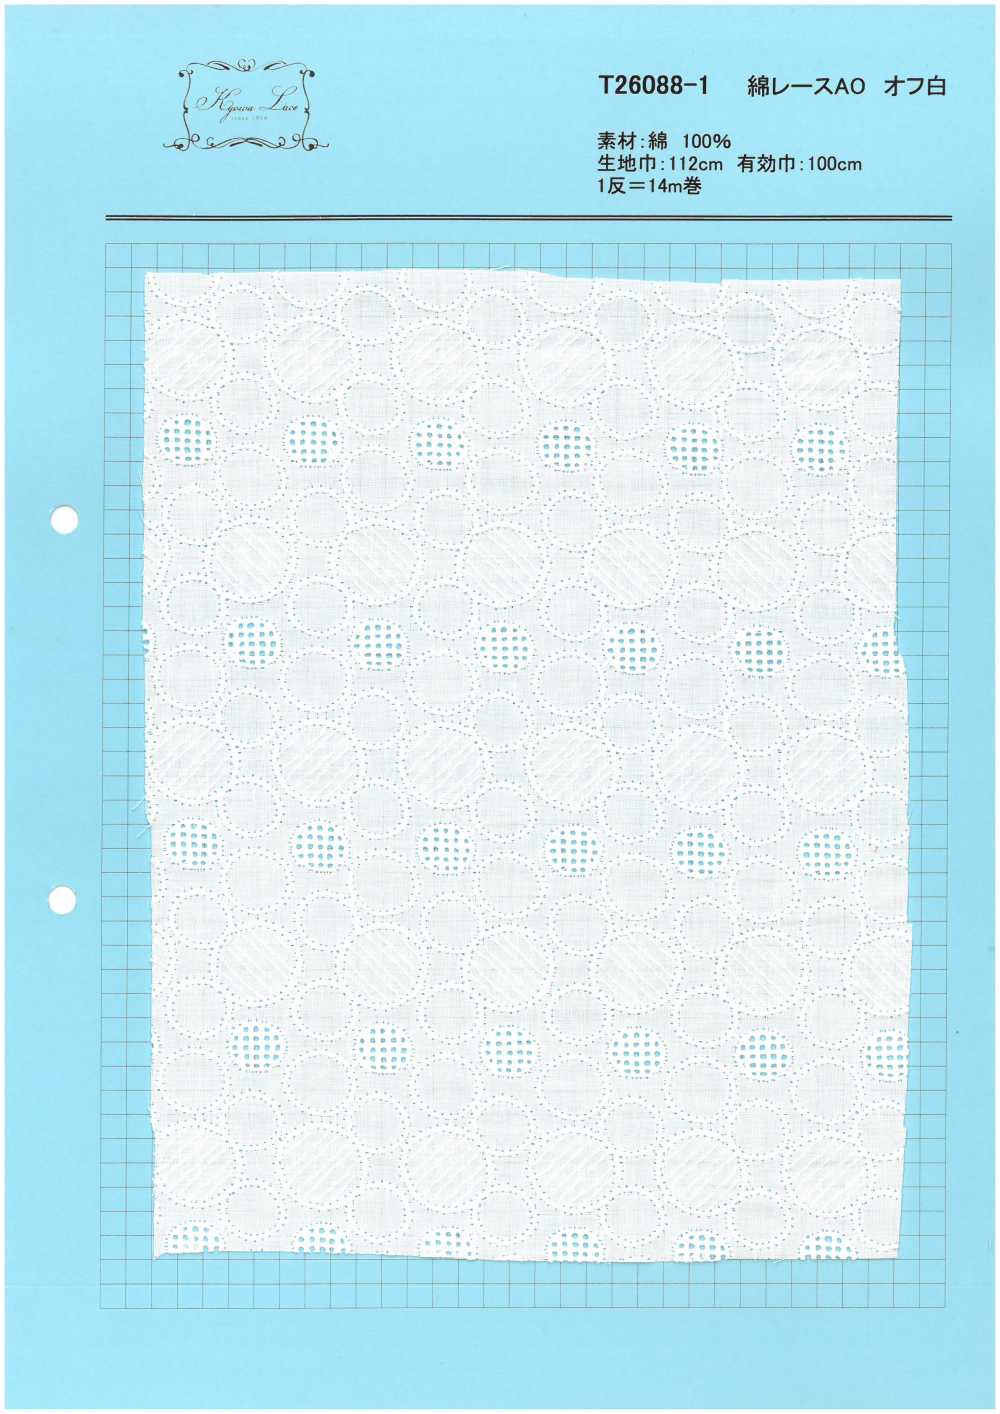 T26088-1 Baumwollspitze AO Off White[Textilgewebe] Kyowa Lace